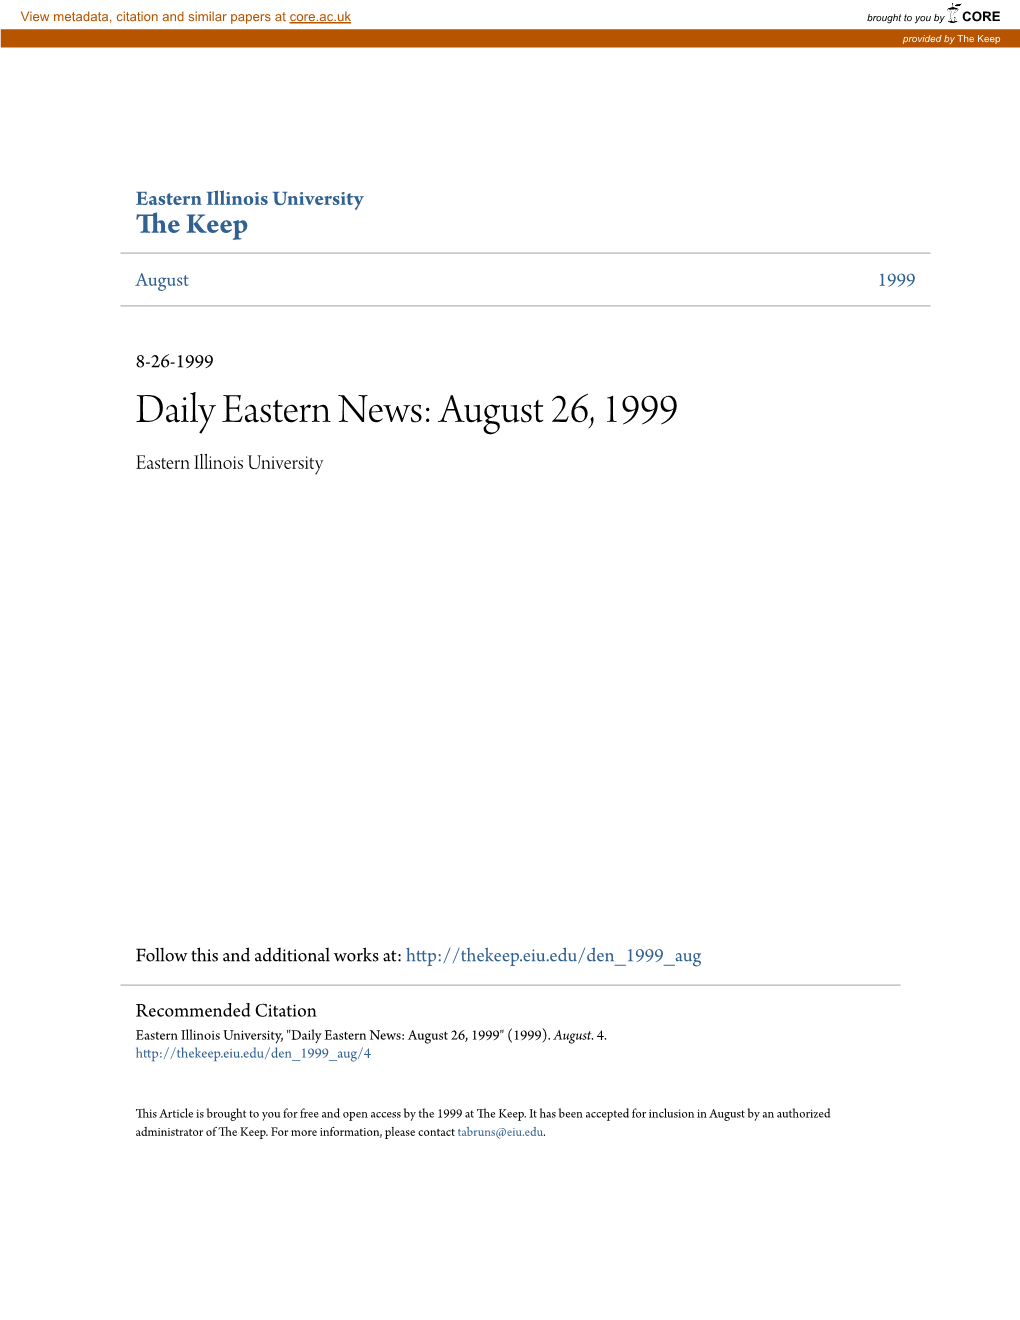 Daily Eastern News: August 26, 1999 Eastern Illinois University